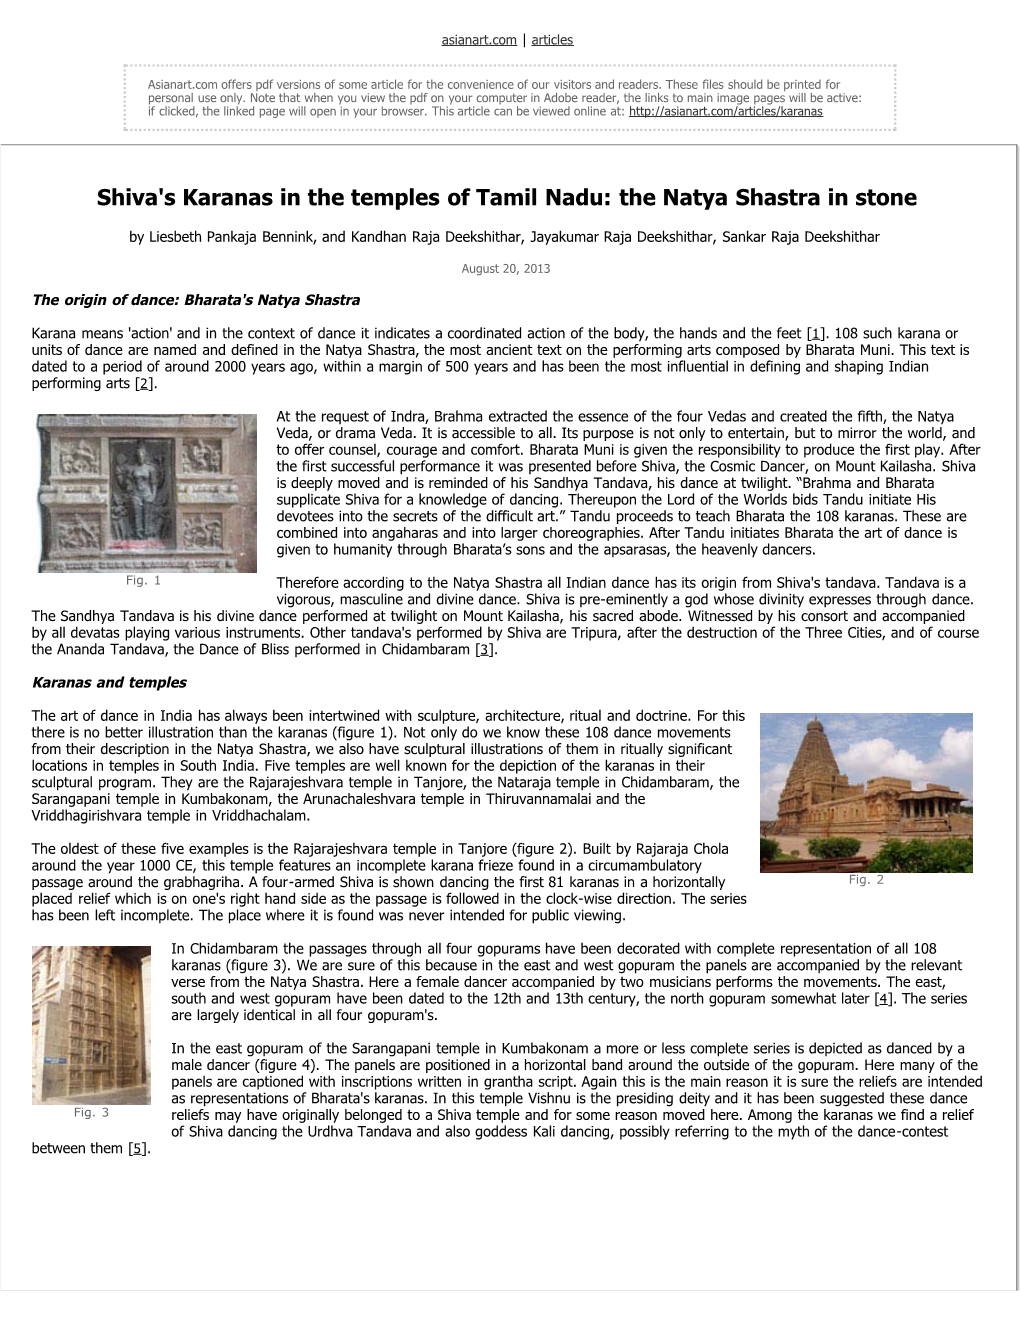 Shiva's Karanas in the Temples of Tamil Nadu: the Natya Shastra in Stone